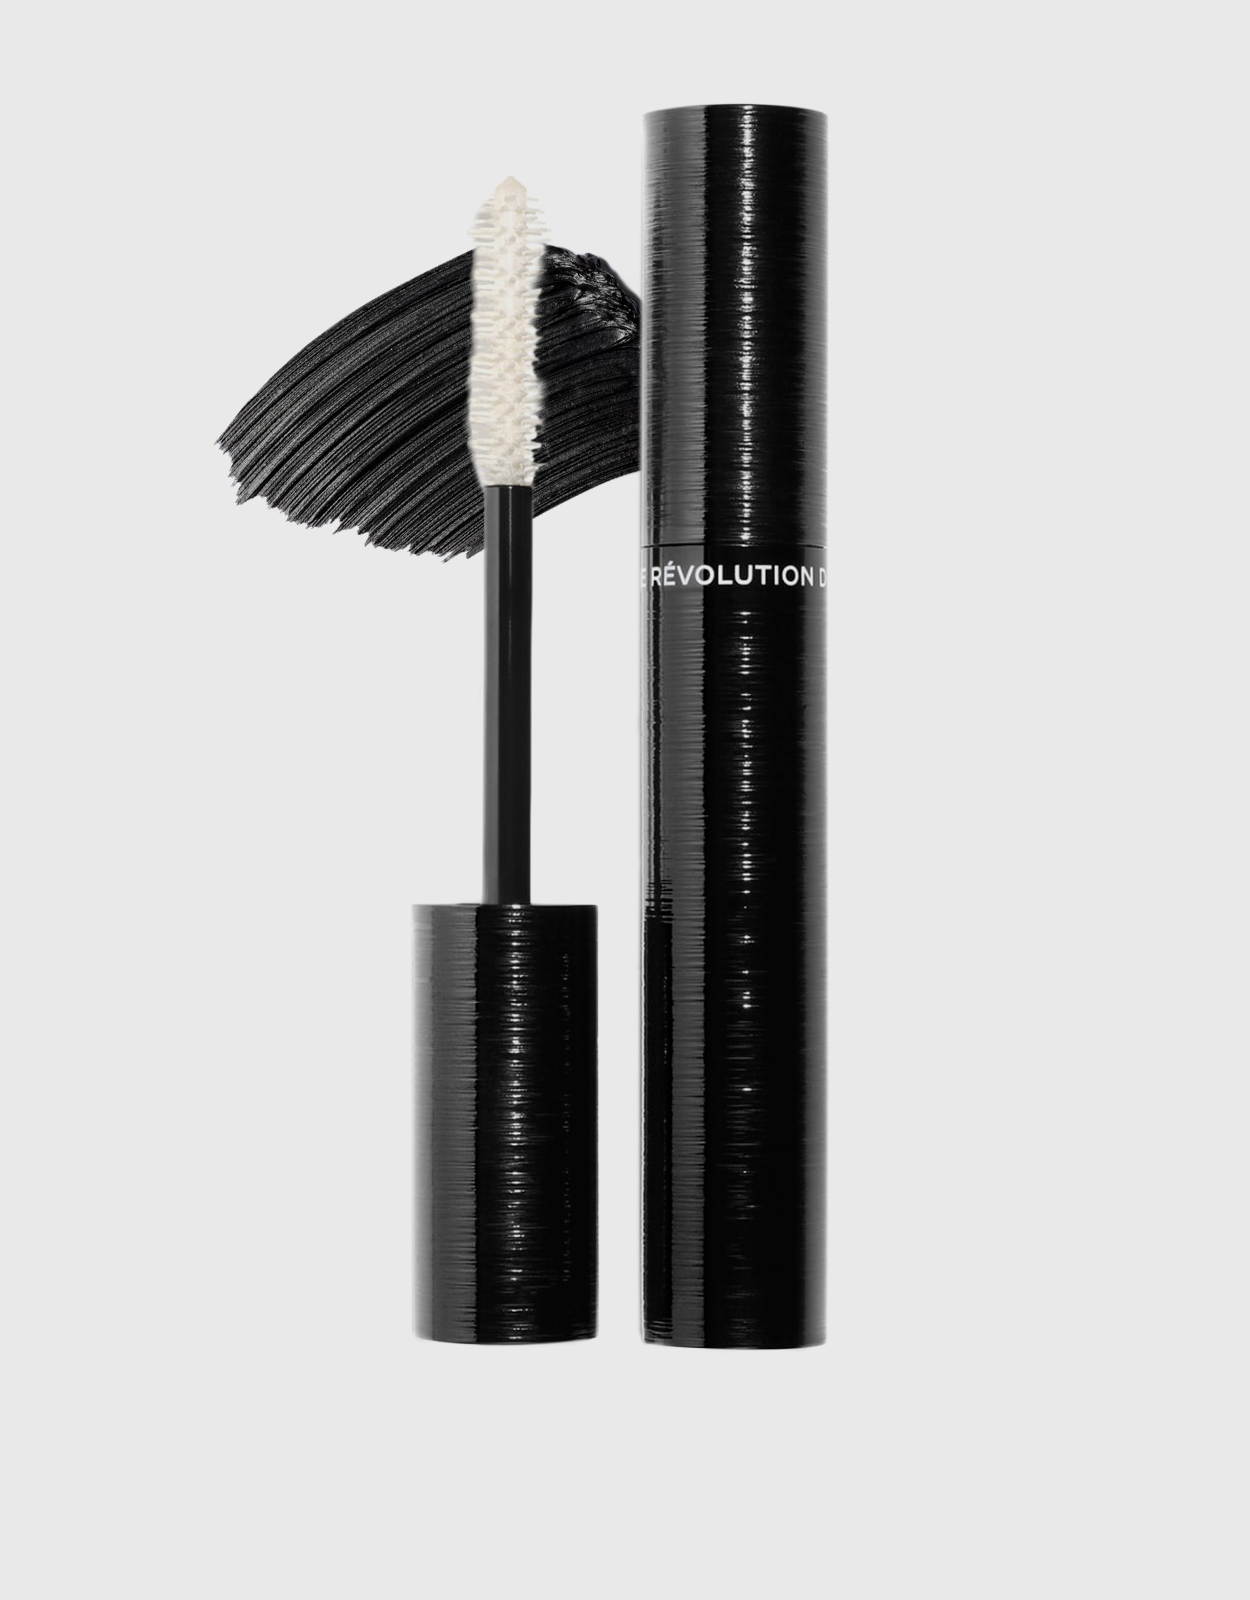 Chanel Beauty Le Volume Revolution De Chanel Extream 3-D Printed Brush  Mascara-Noir (メイクアップ,アイズ,マスカラ)